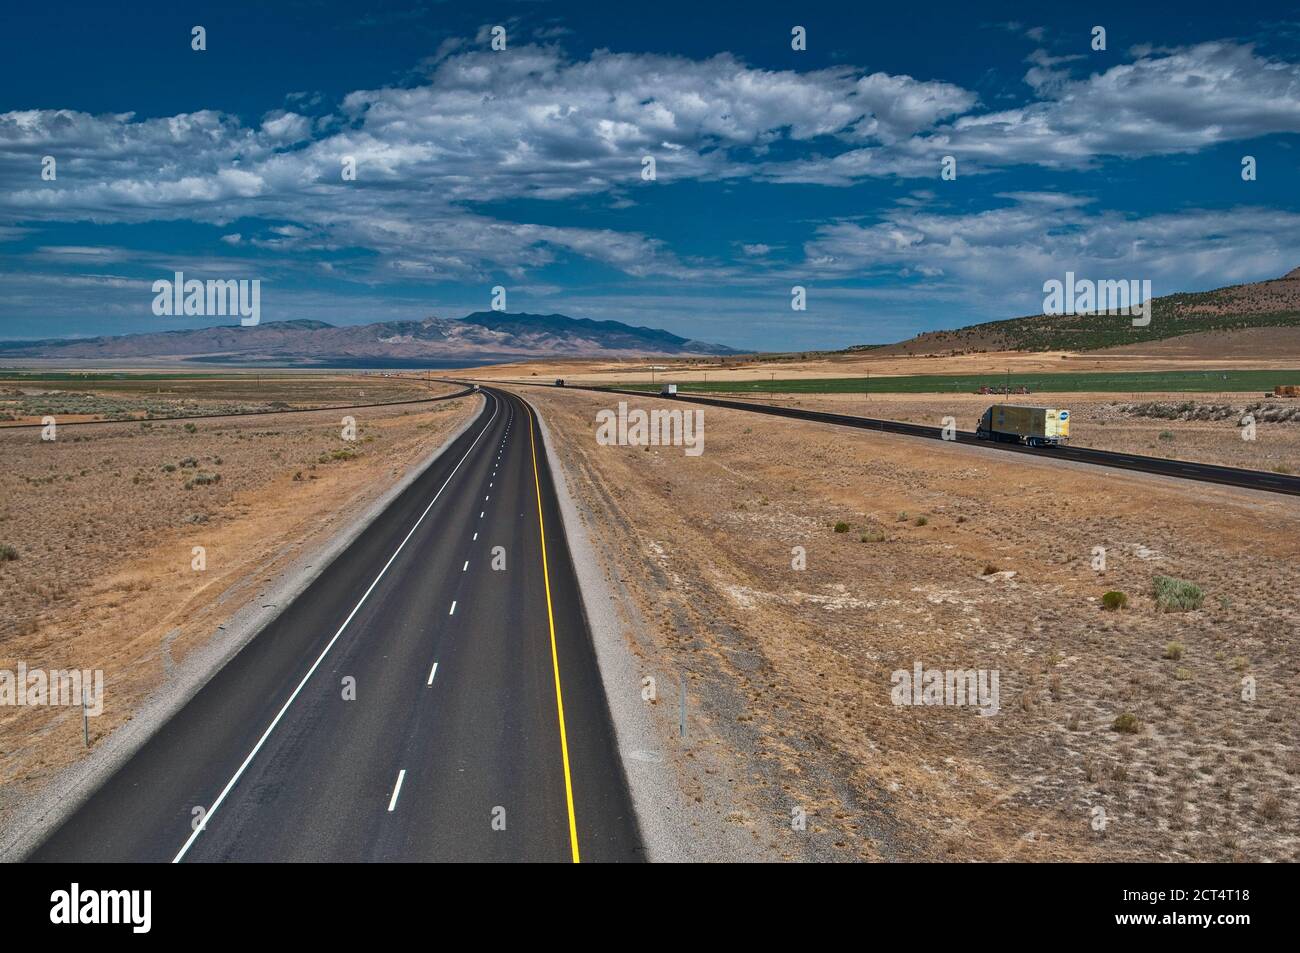 I-84 Freeway in Curlew Valley in Great Basin Desert, Utah, USA Stockfoto